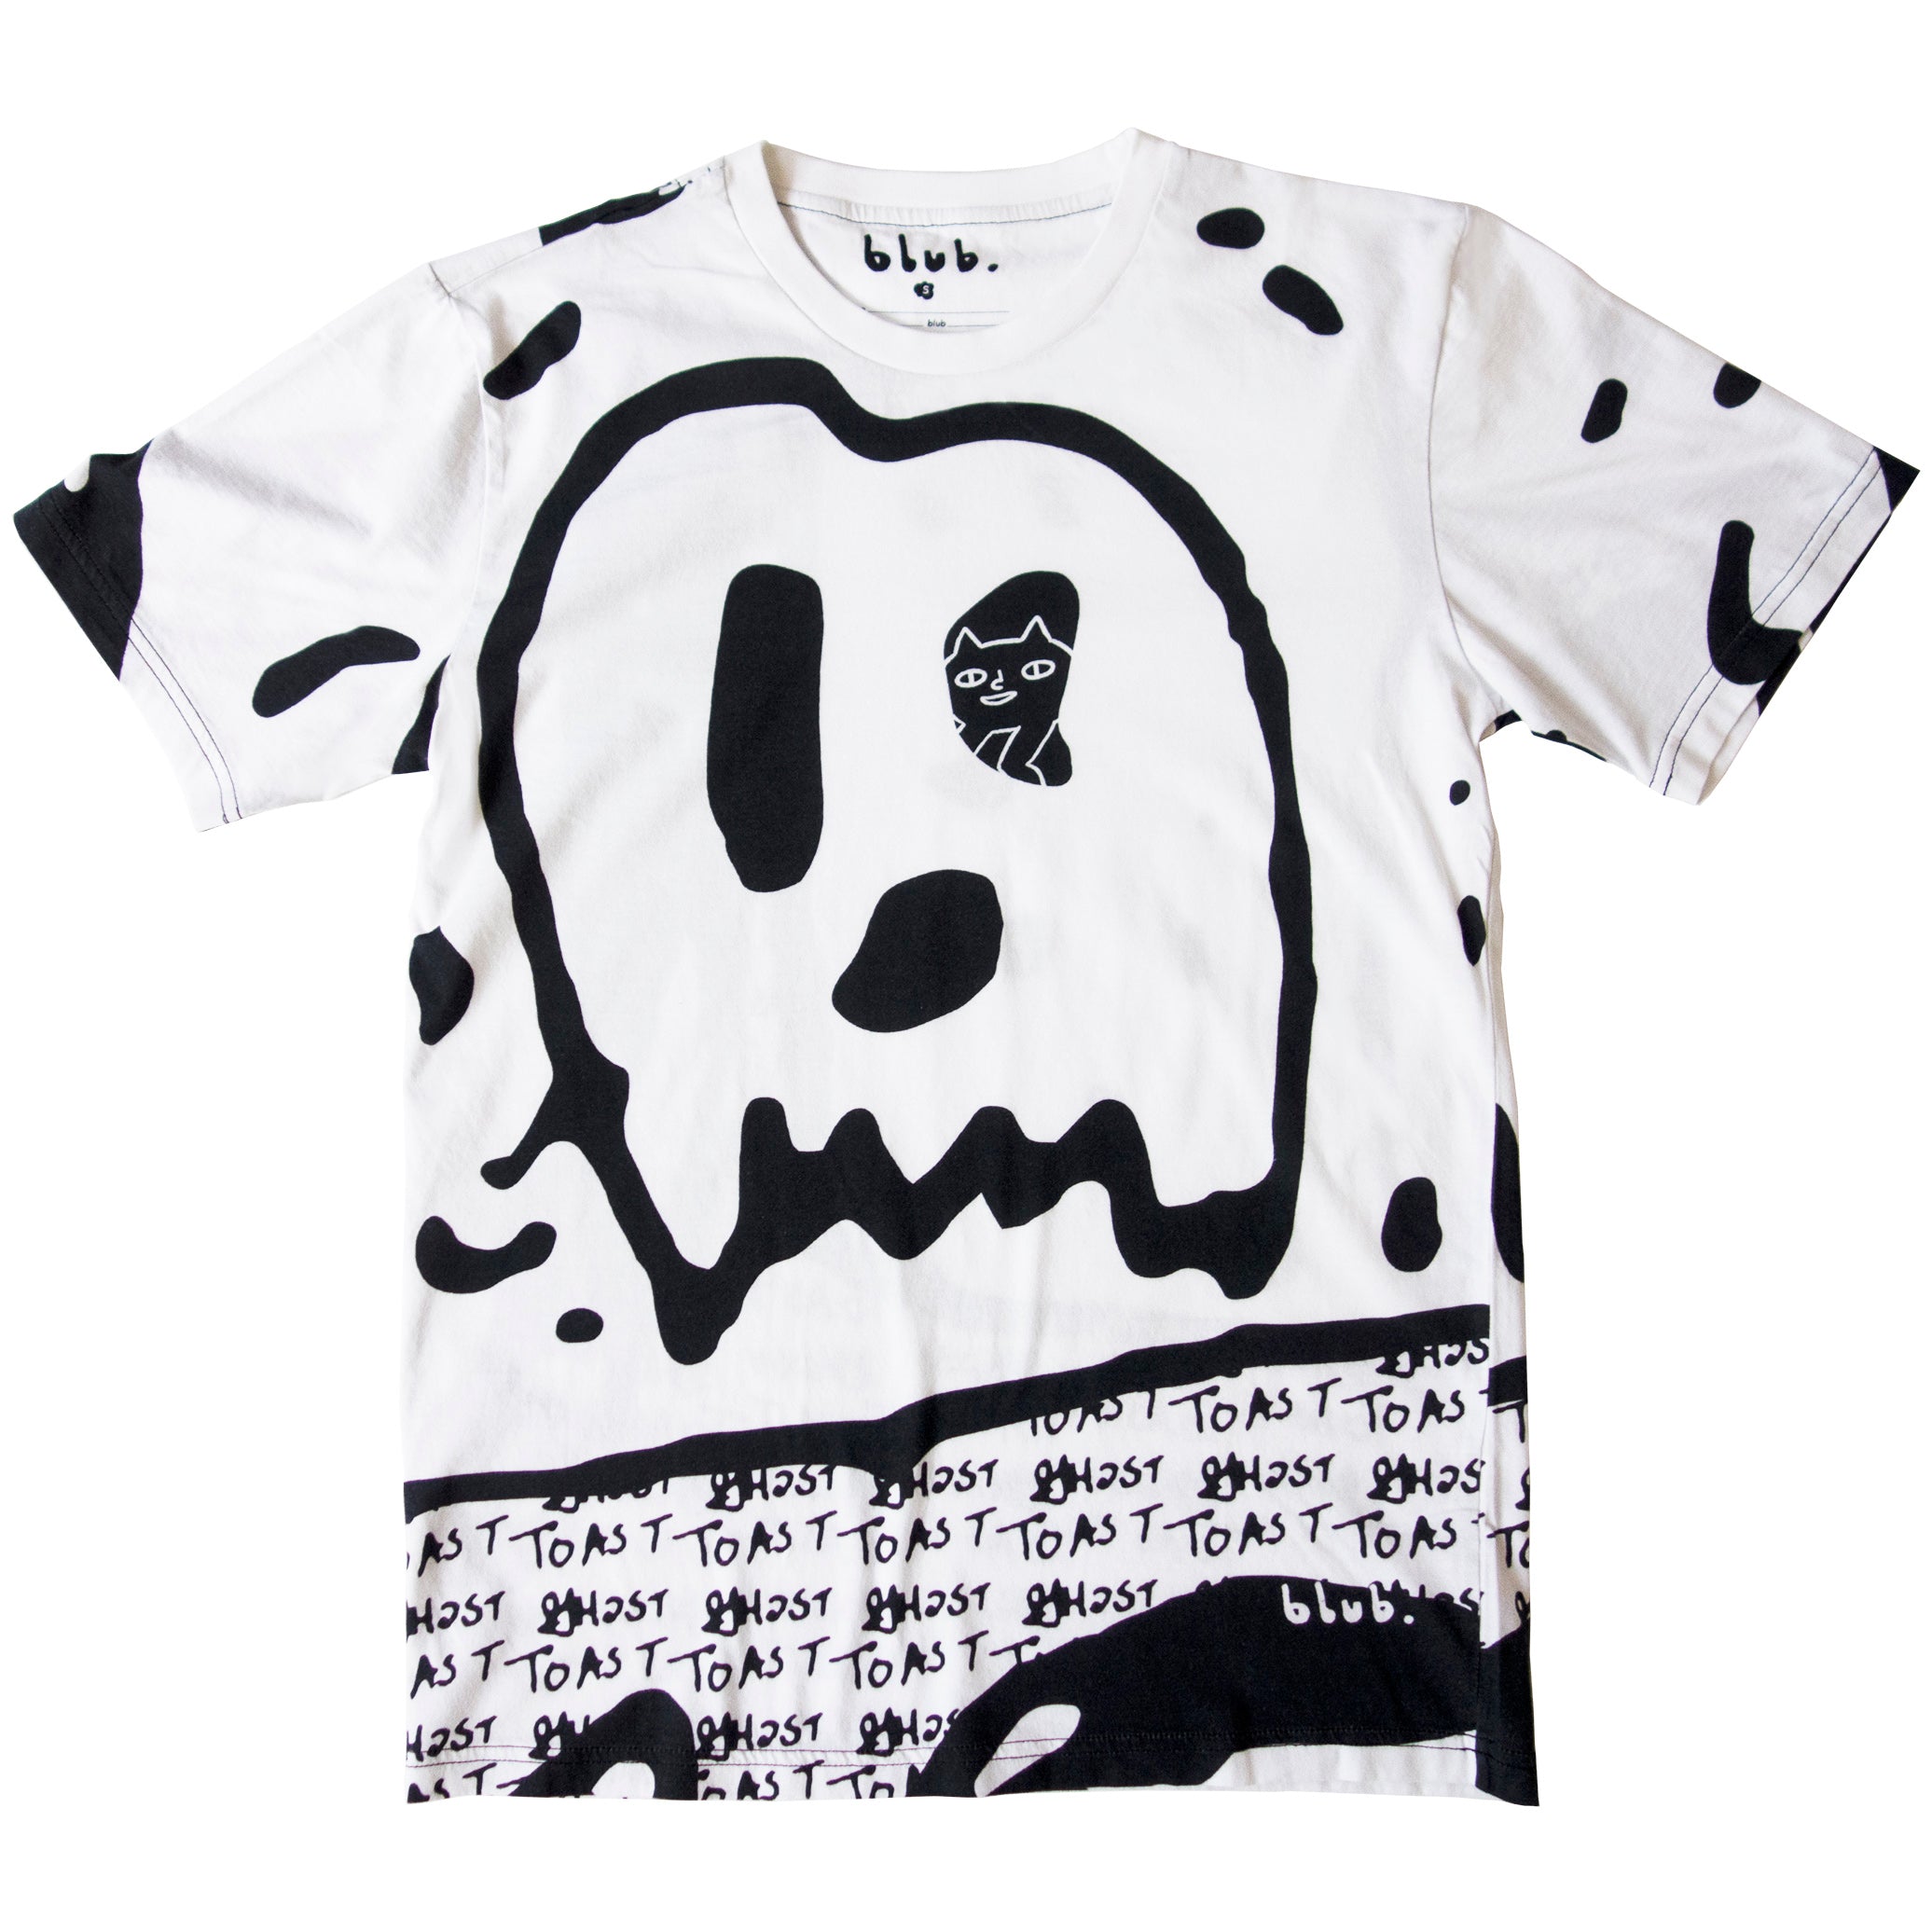 Ghostface Scream Style 6 Baseball Jersey Shirt Halloween Gift Hot 2023  Custom Name For Men And Women - Banantees